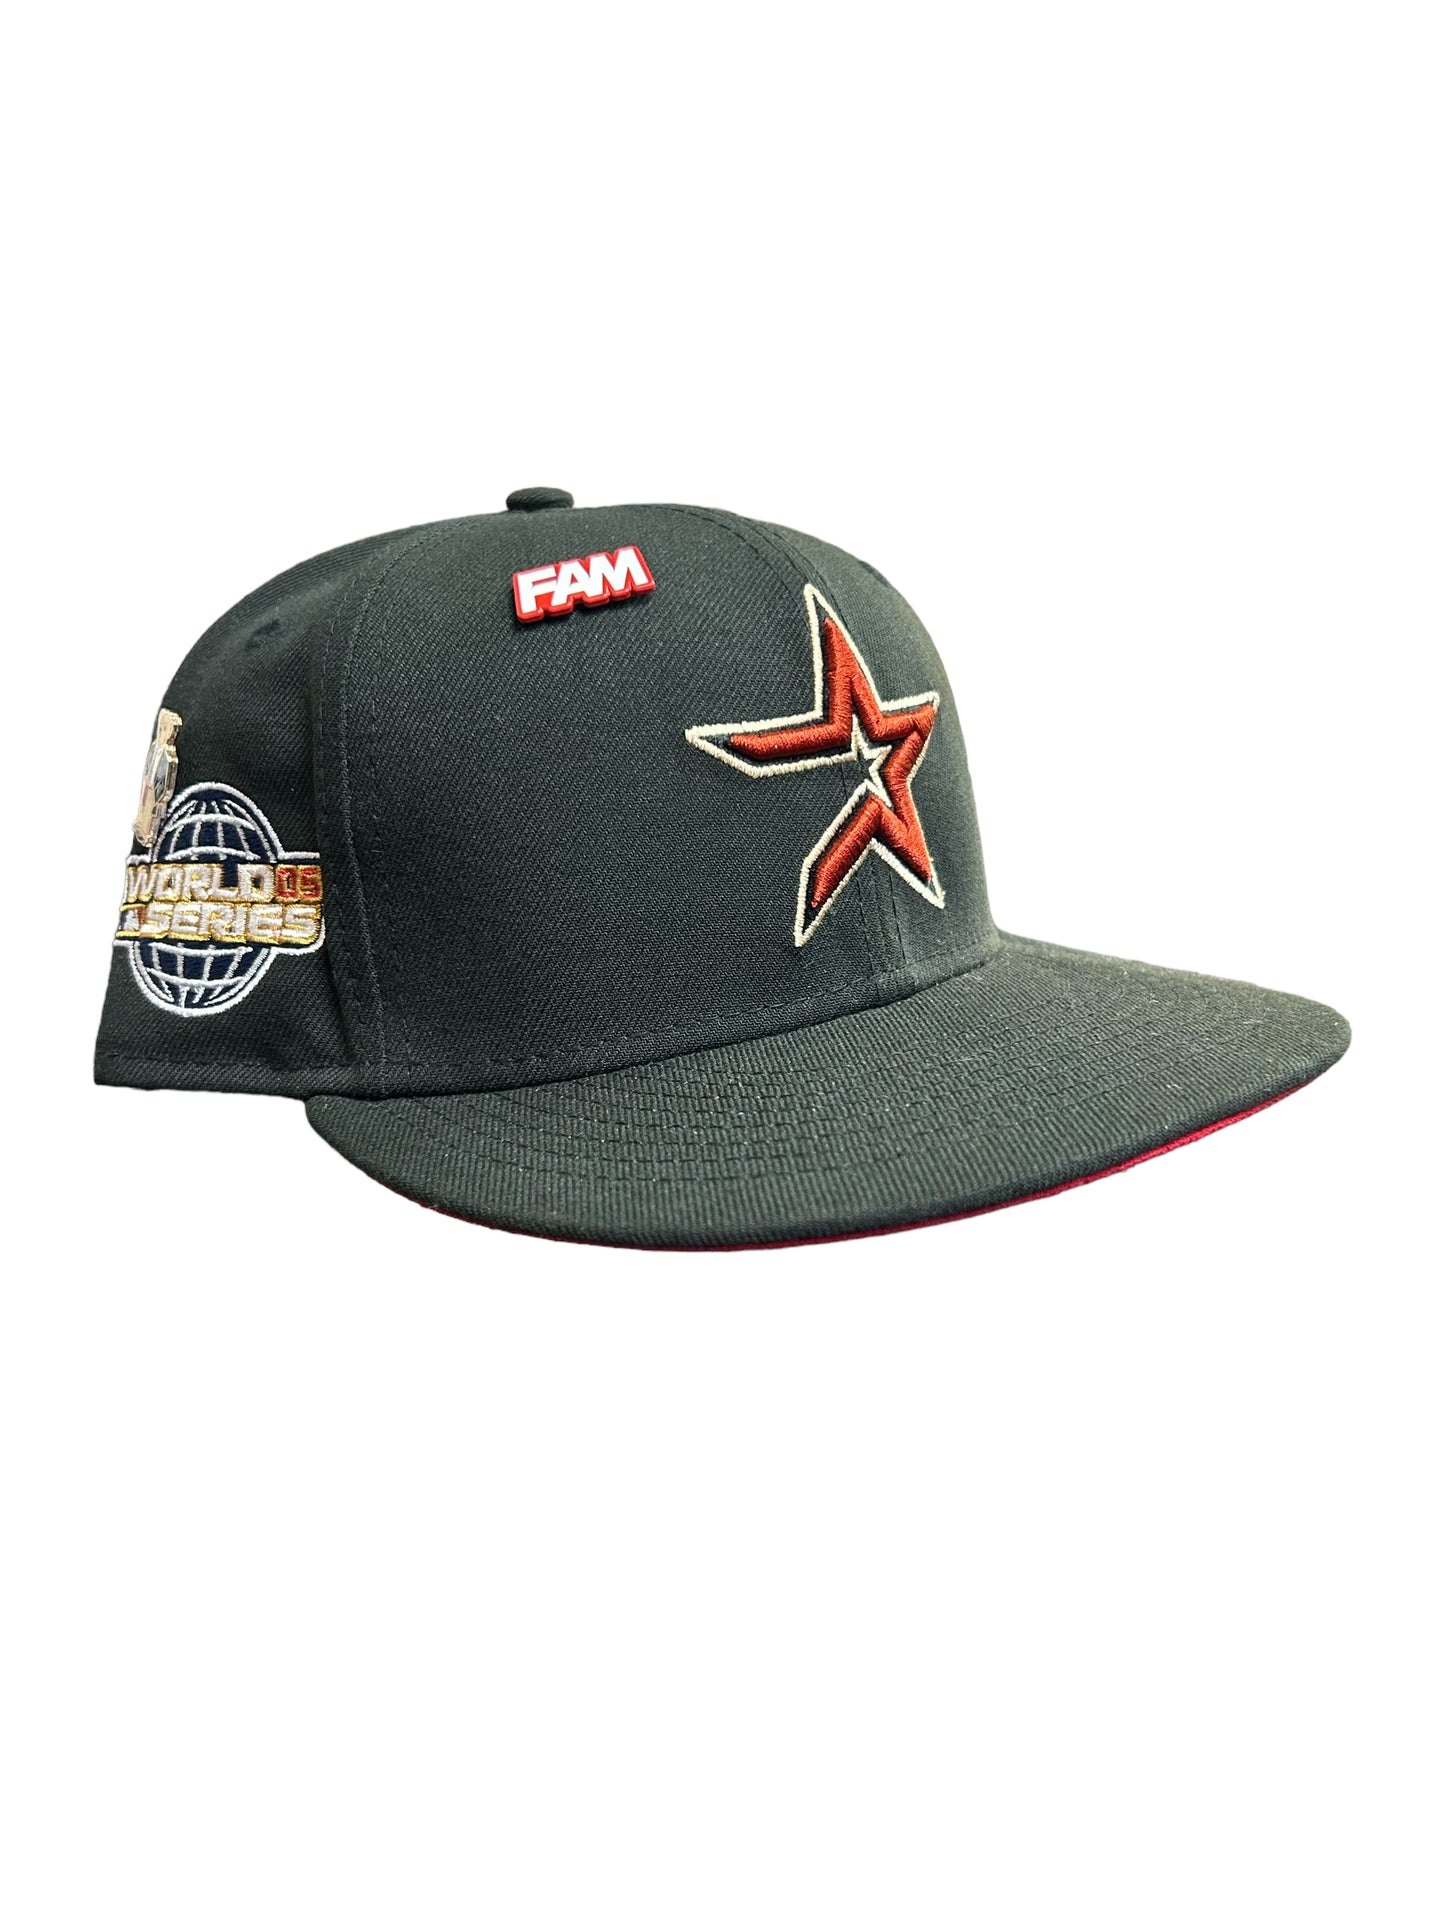 Houston Astros Black/Red Hat